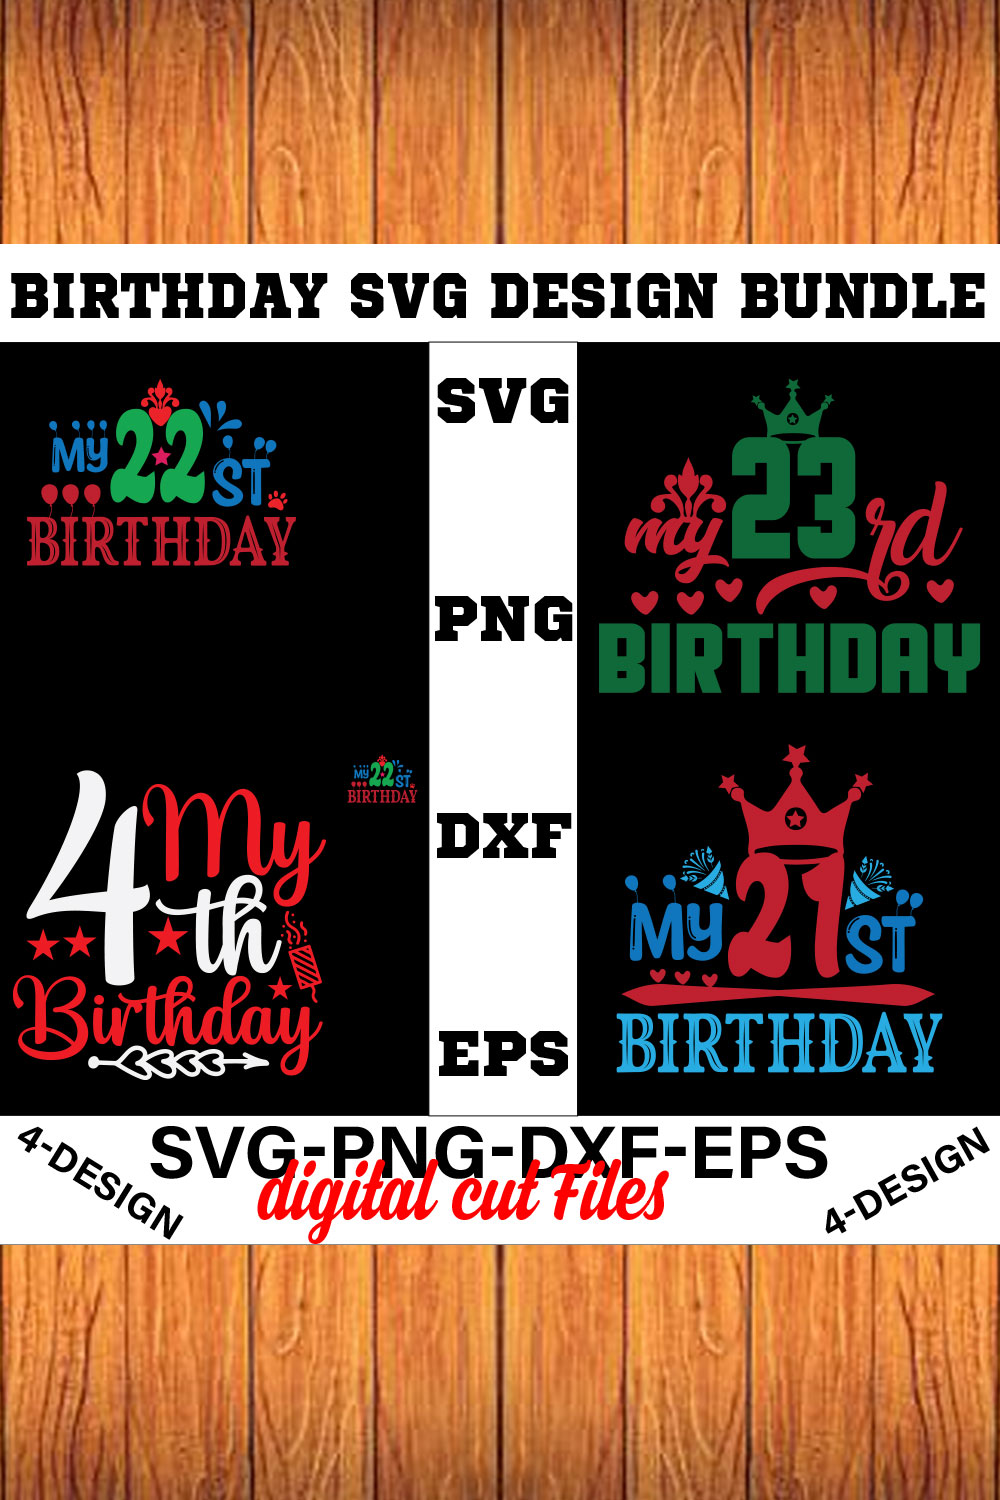 birthday svg design bundle Happy birthday svg bundle hand lettered birthday svg birthday party svg Volume-22 pinterest preview image.